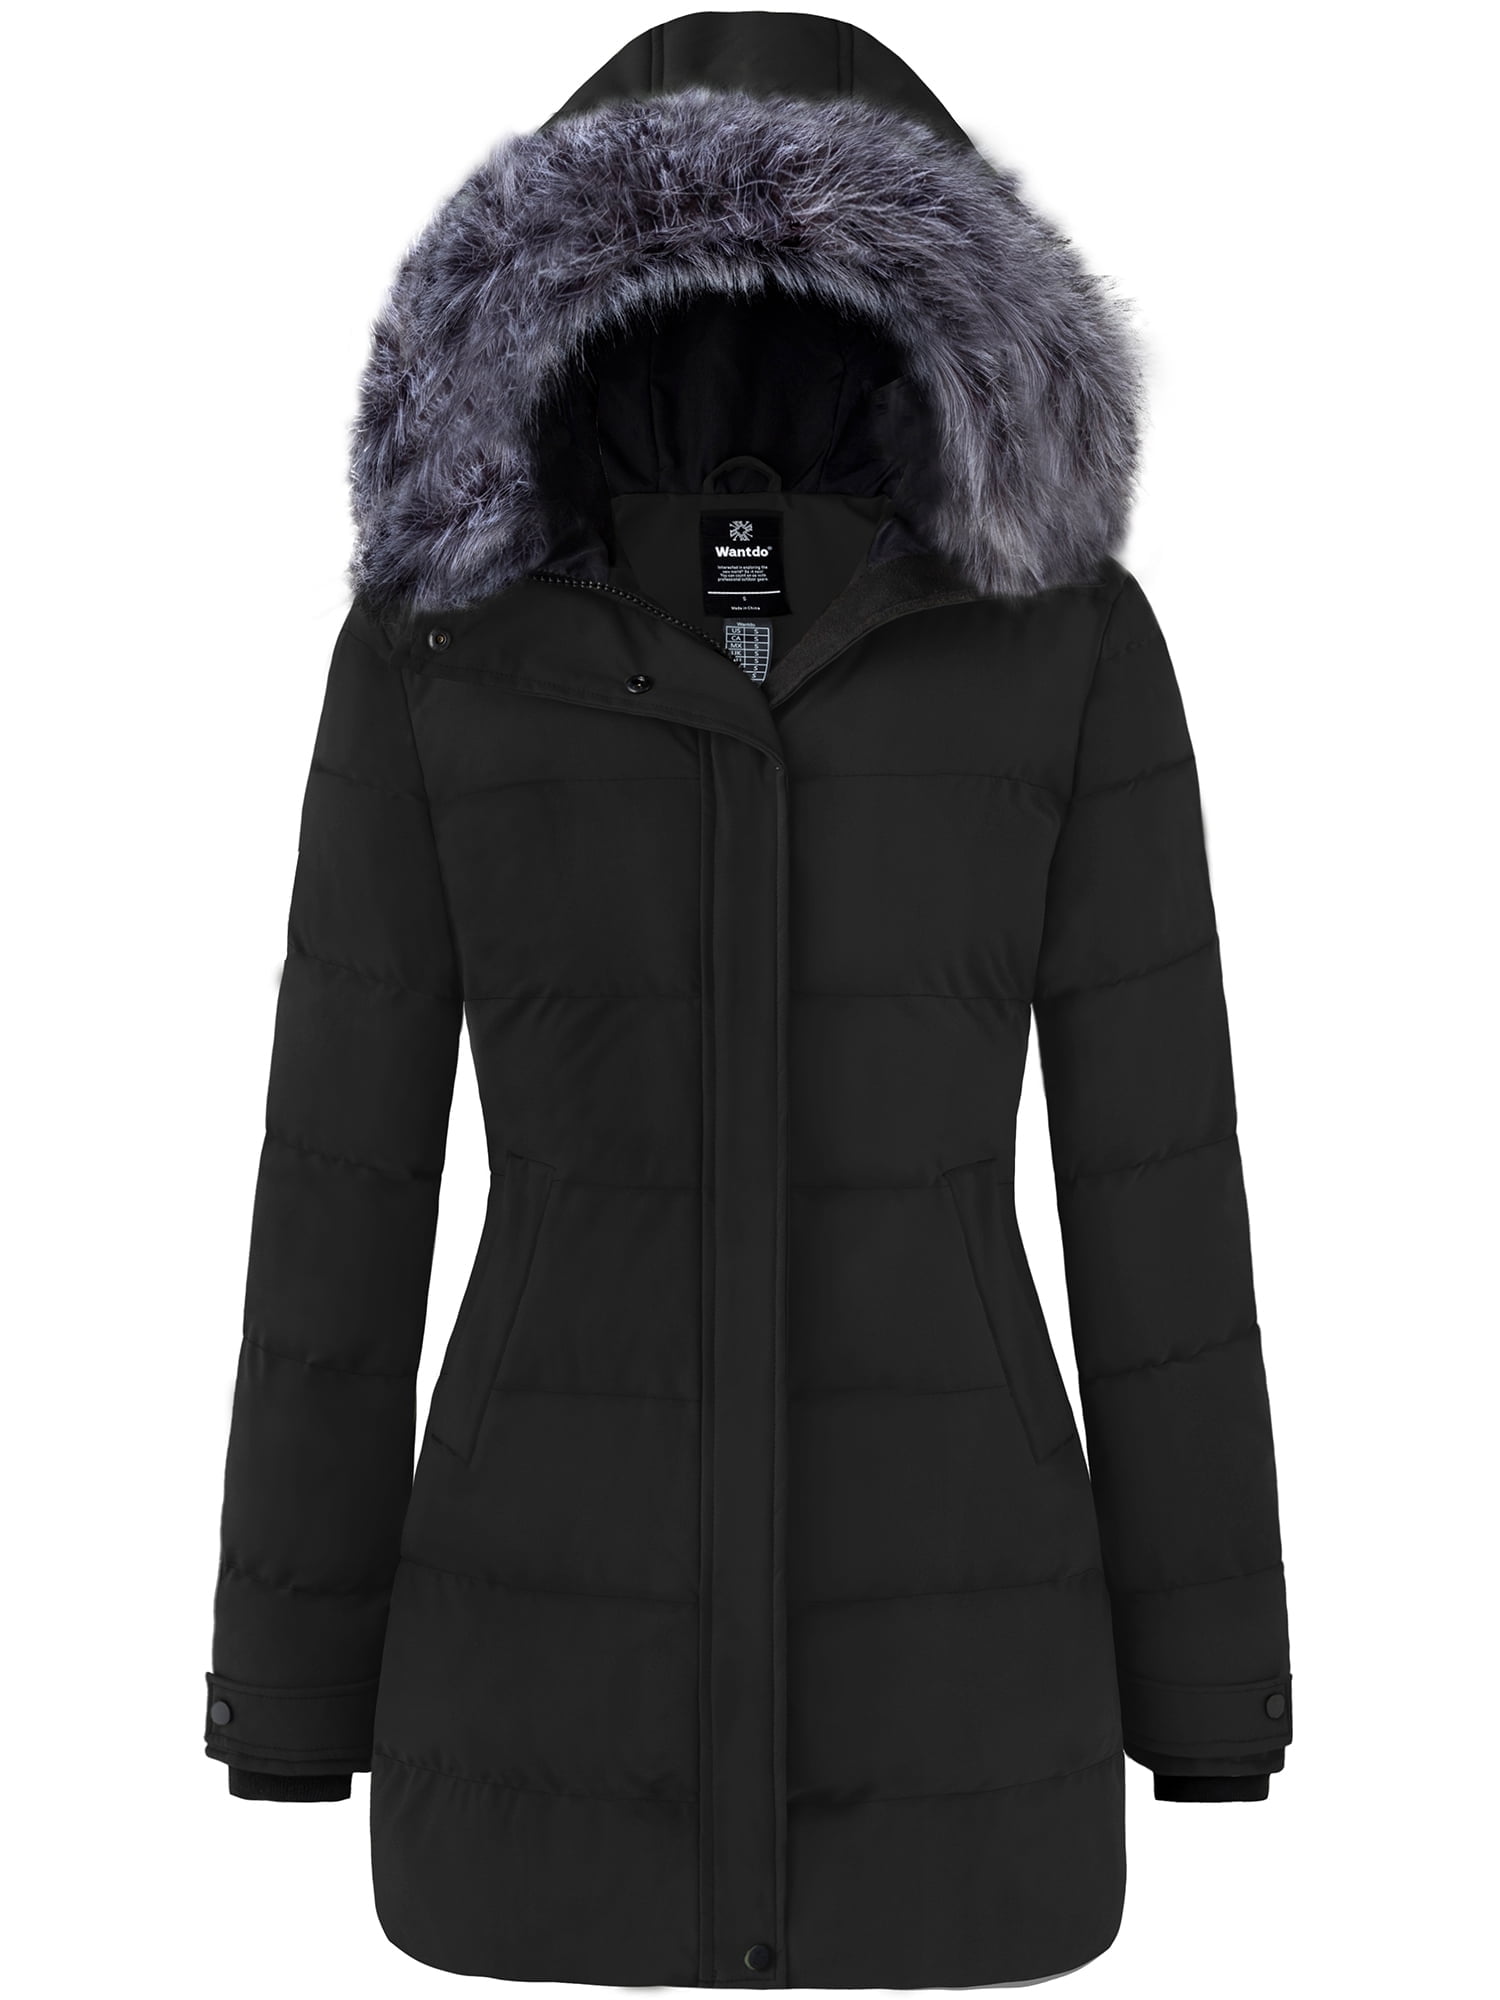 Wantdo Women's Winter Jacket Warm Puffer Coat Insulated Winter Coat ...